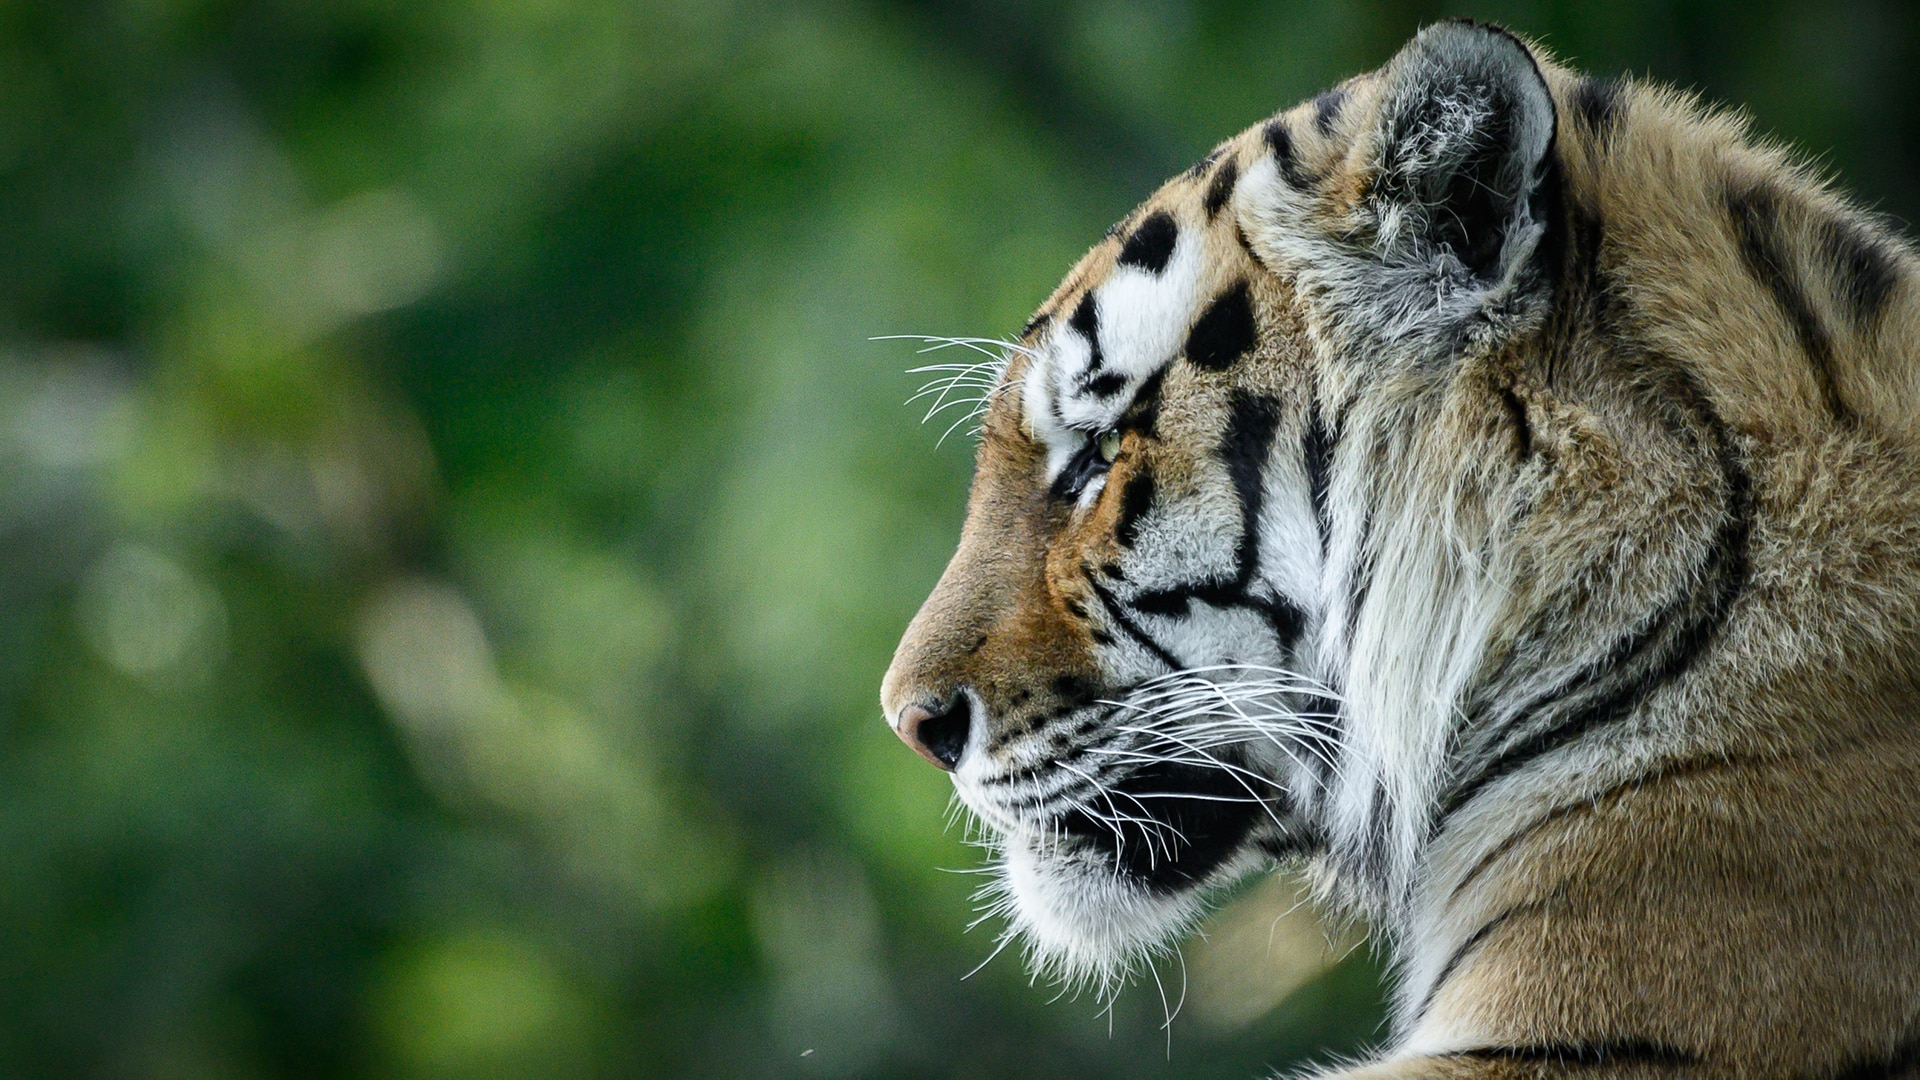 Saving the amur tiger | BBC Earth